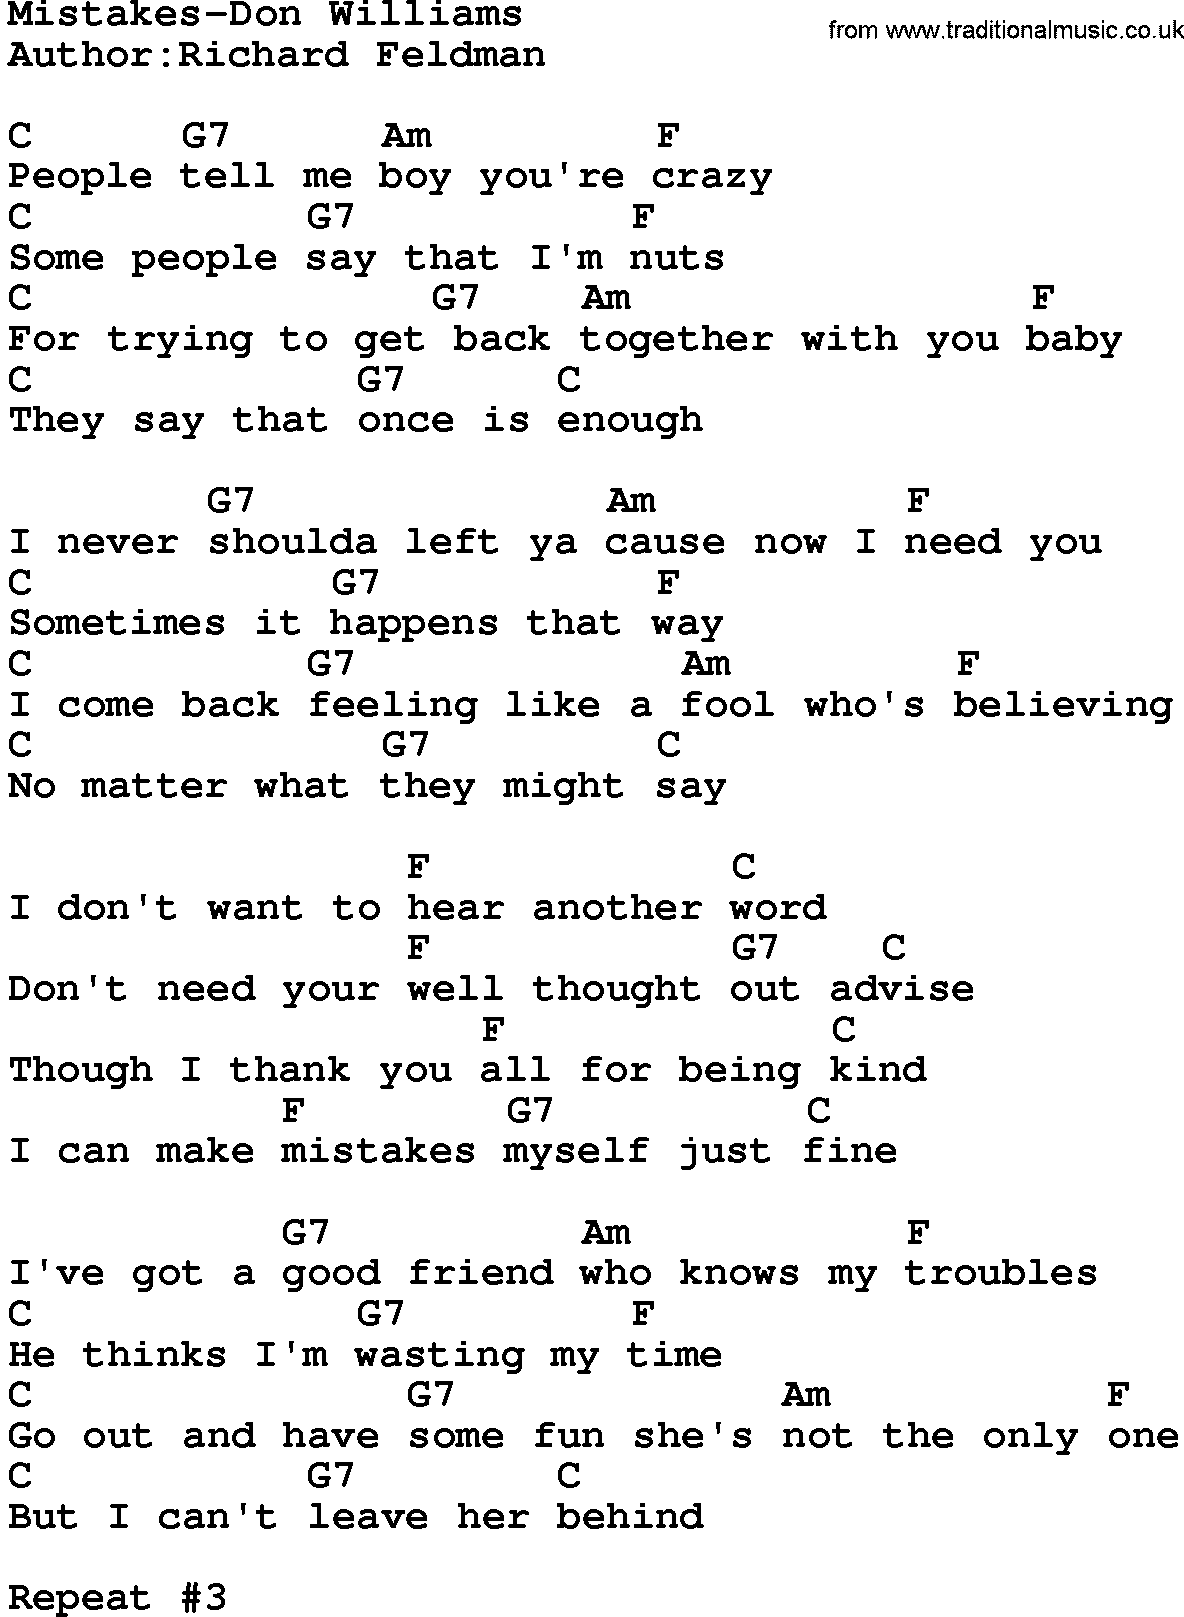 Mistakes Lyrics by Don Williams